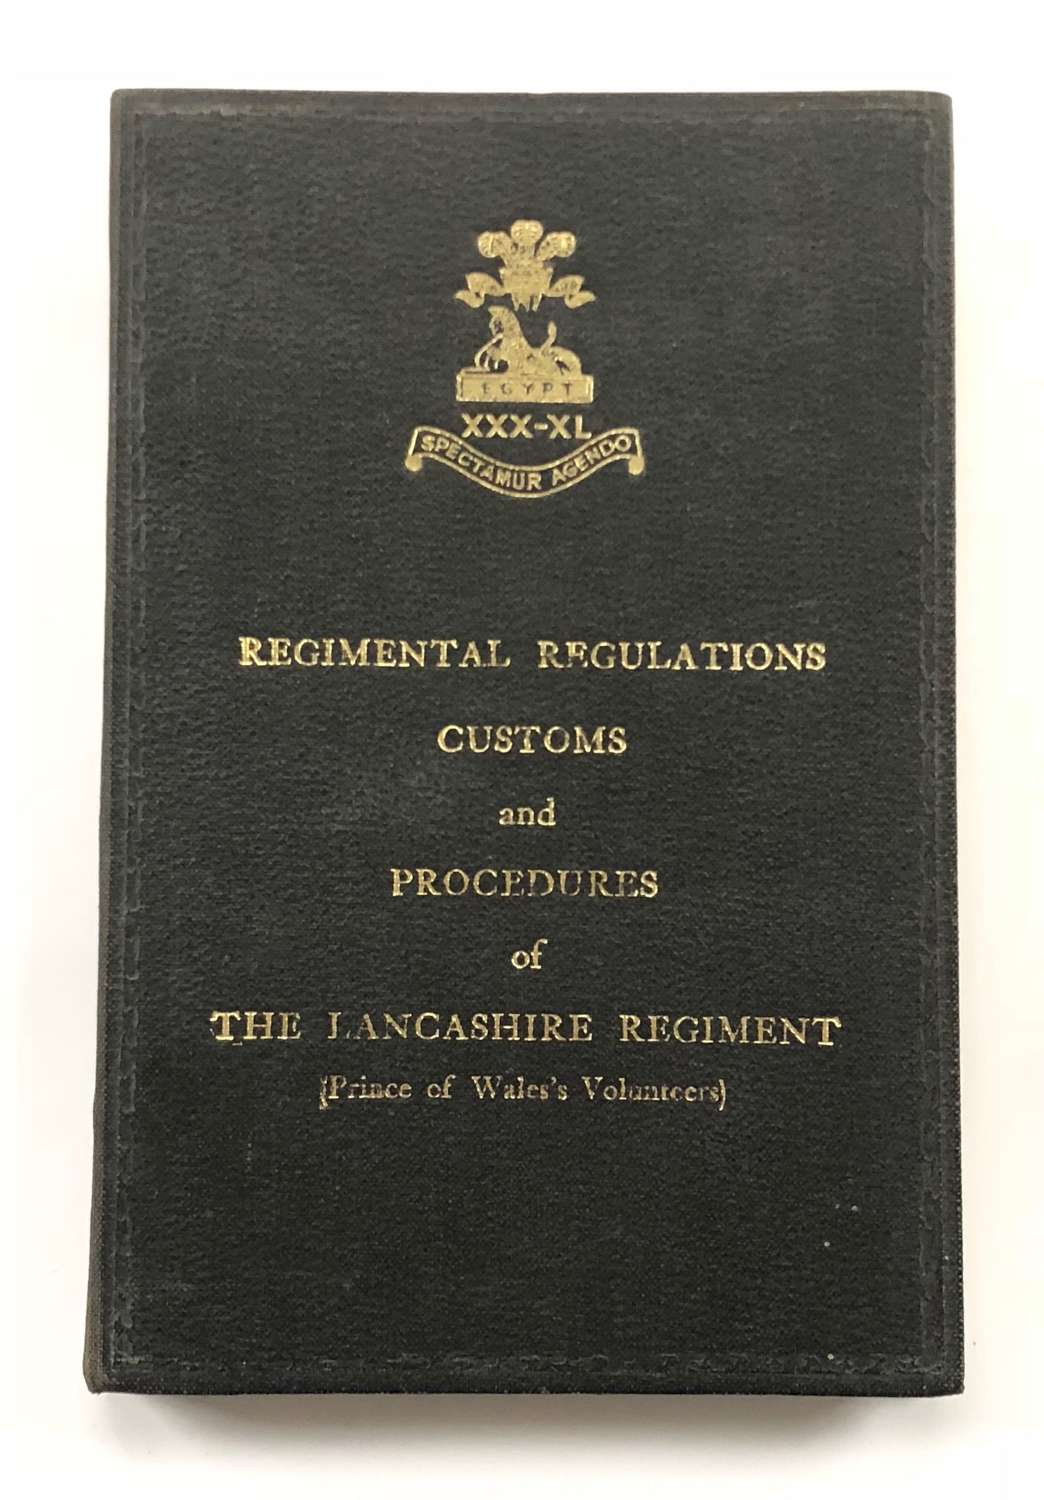 The Lancashire Regiment Cold War 1961 Regimental Instructions.